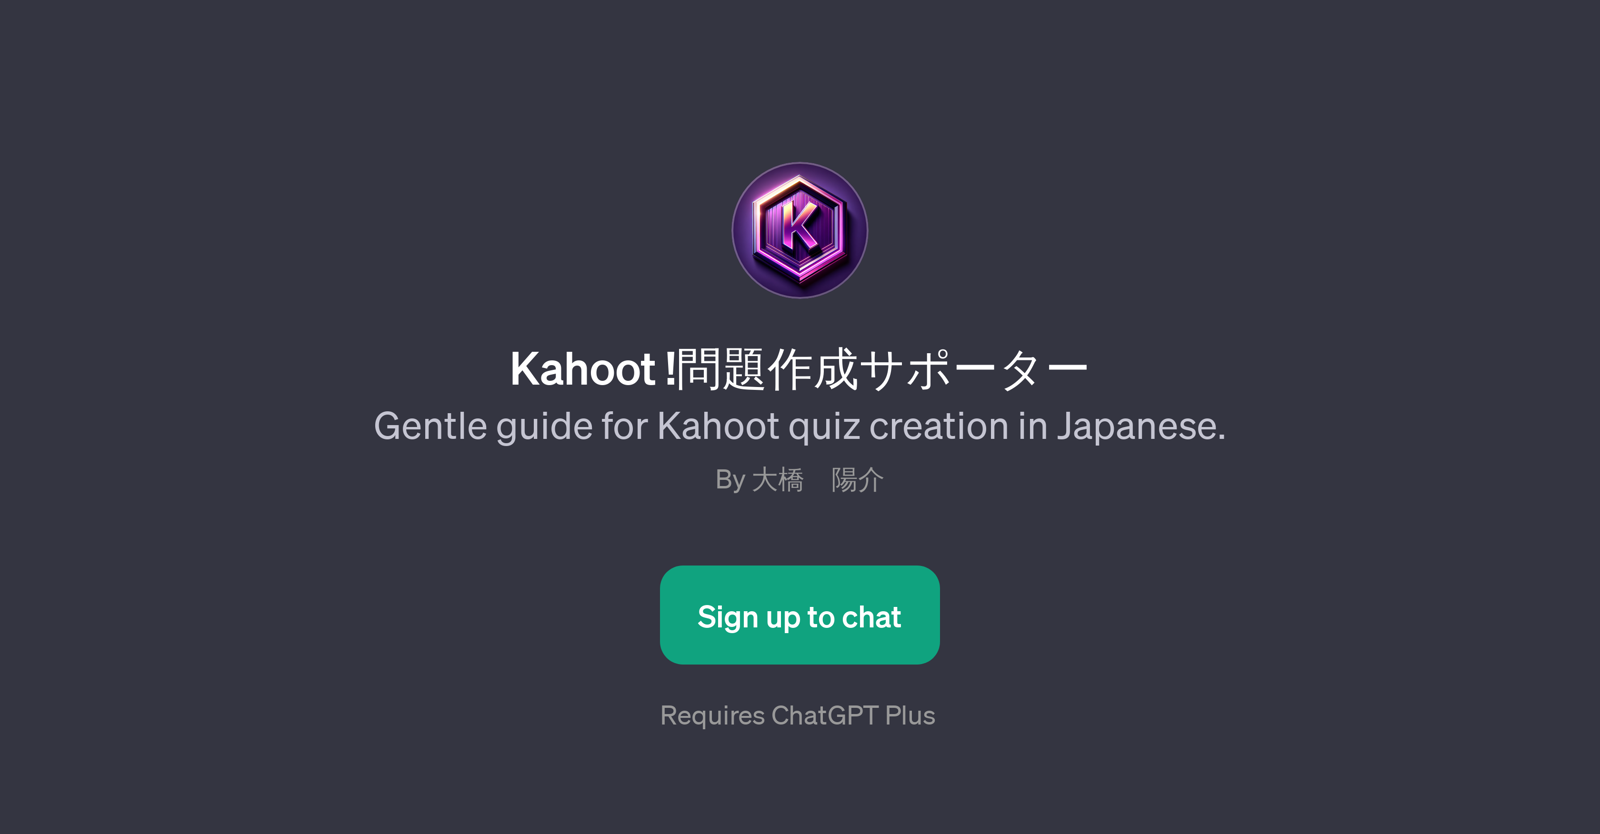 Kahoot! Quiz Creation Supporter website